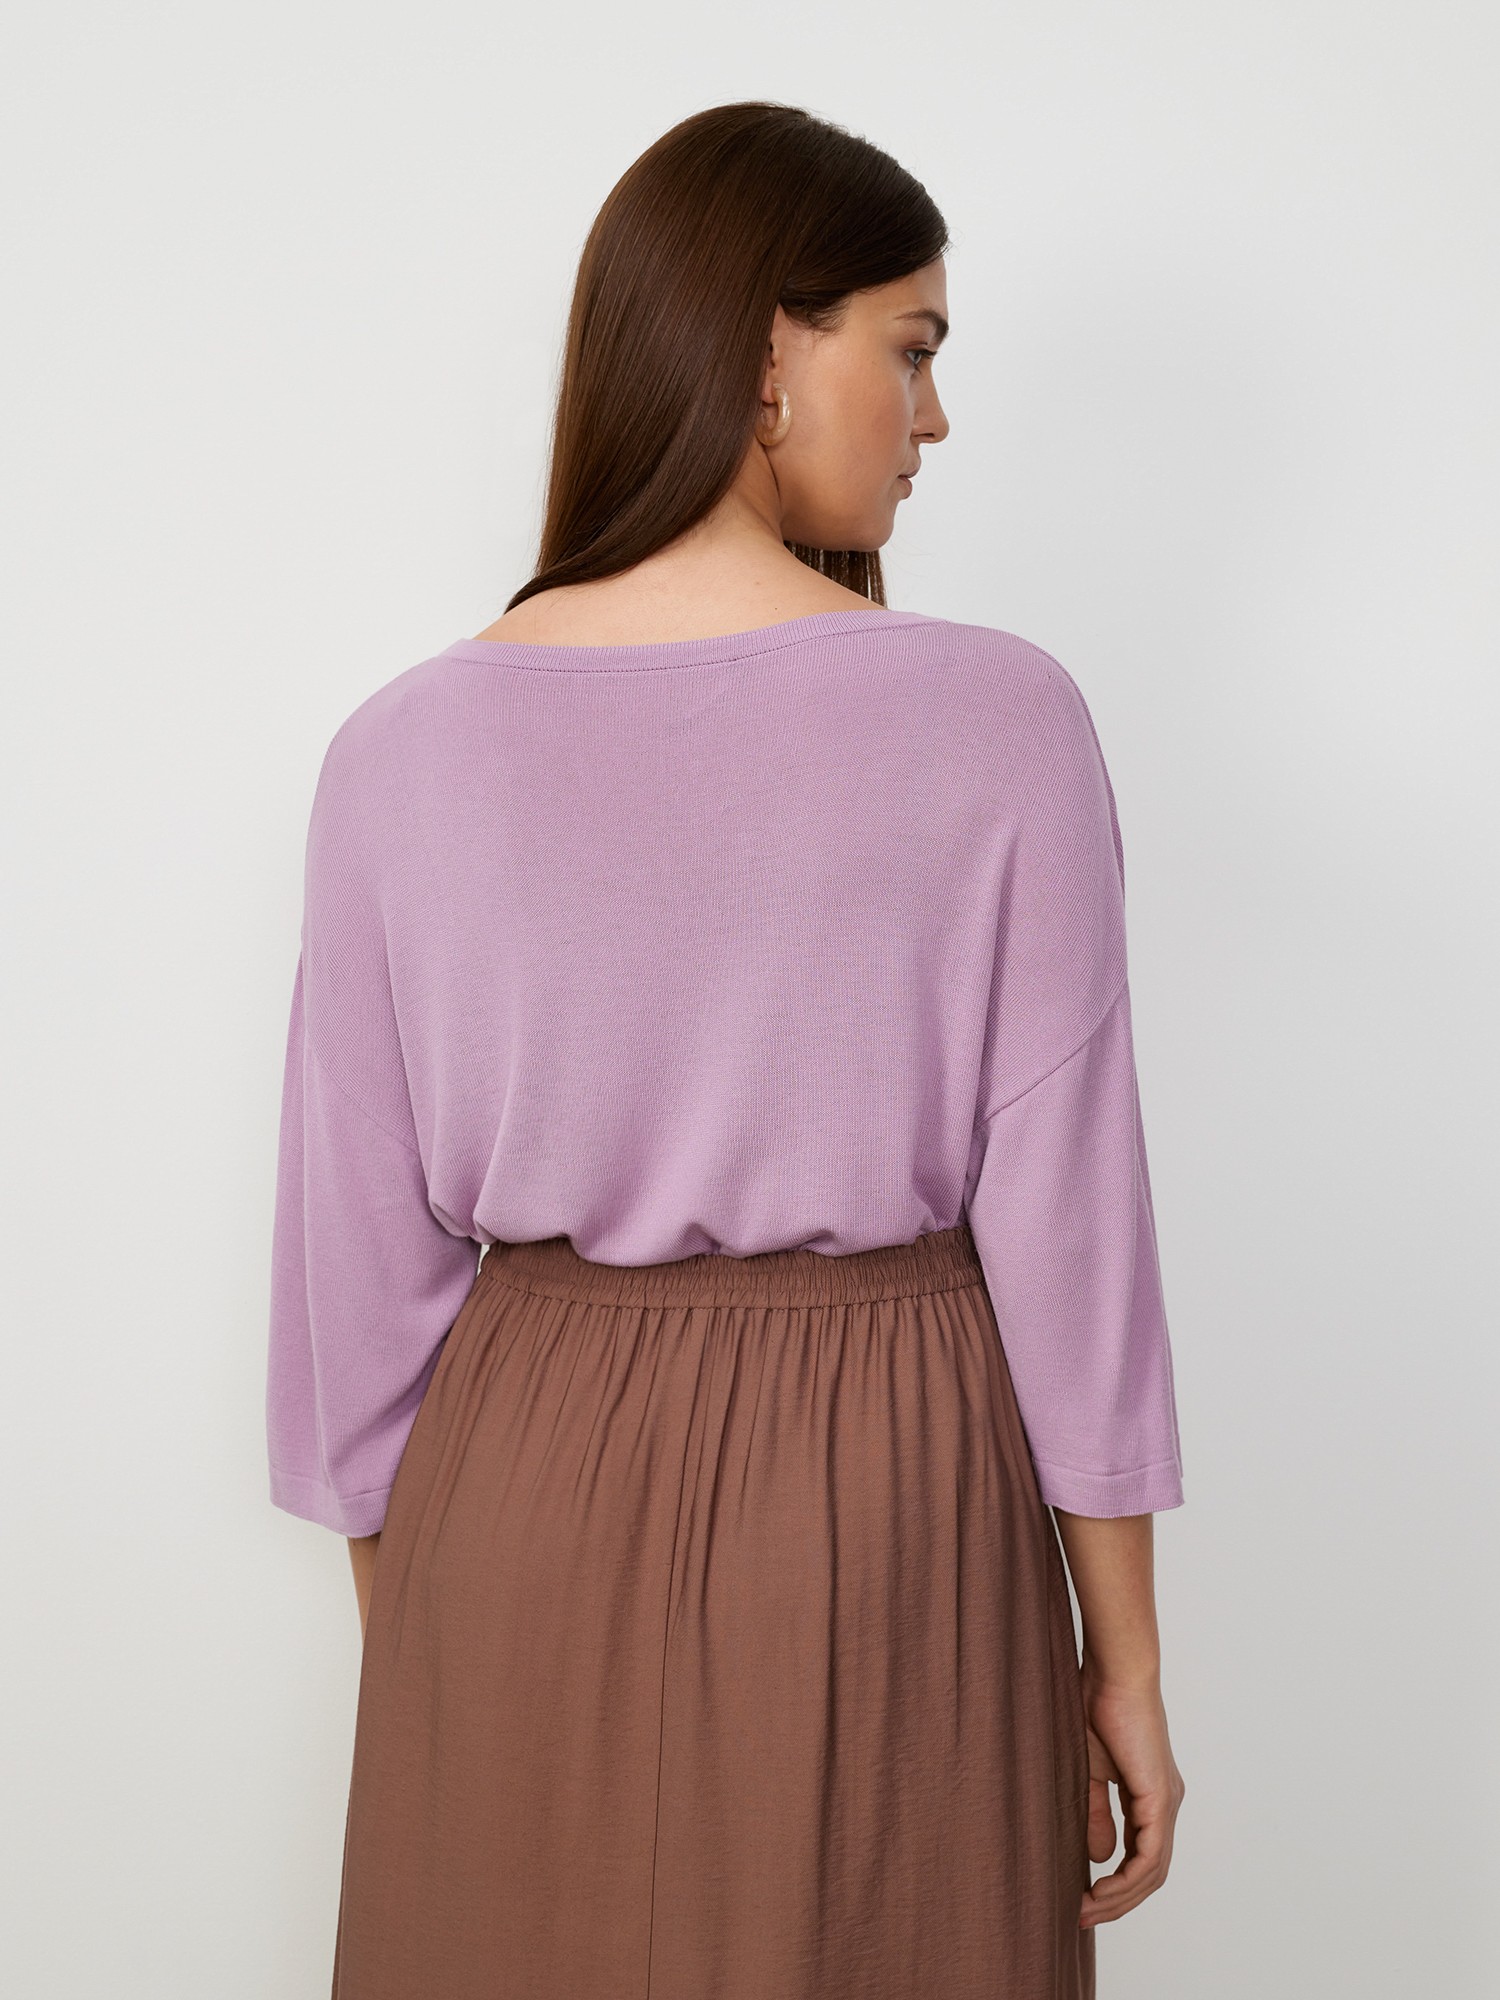 Блуза вязаная с монилью Lalis BL1069V, цвет фиолетовый, размер 46 - фото 4